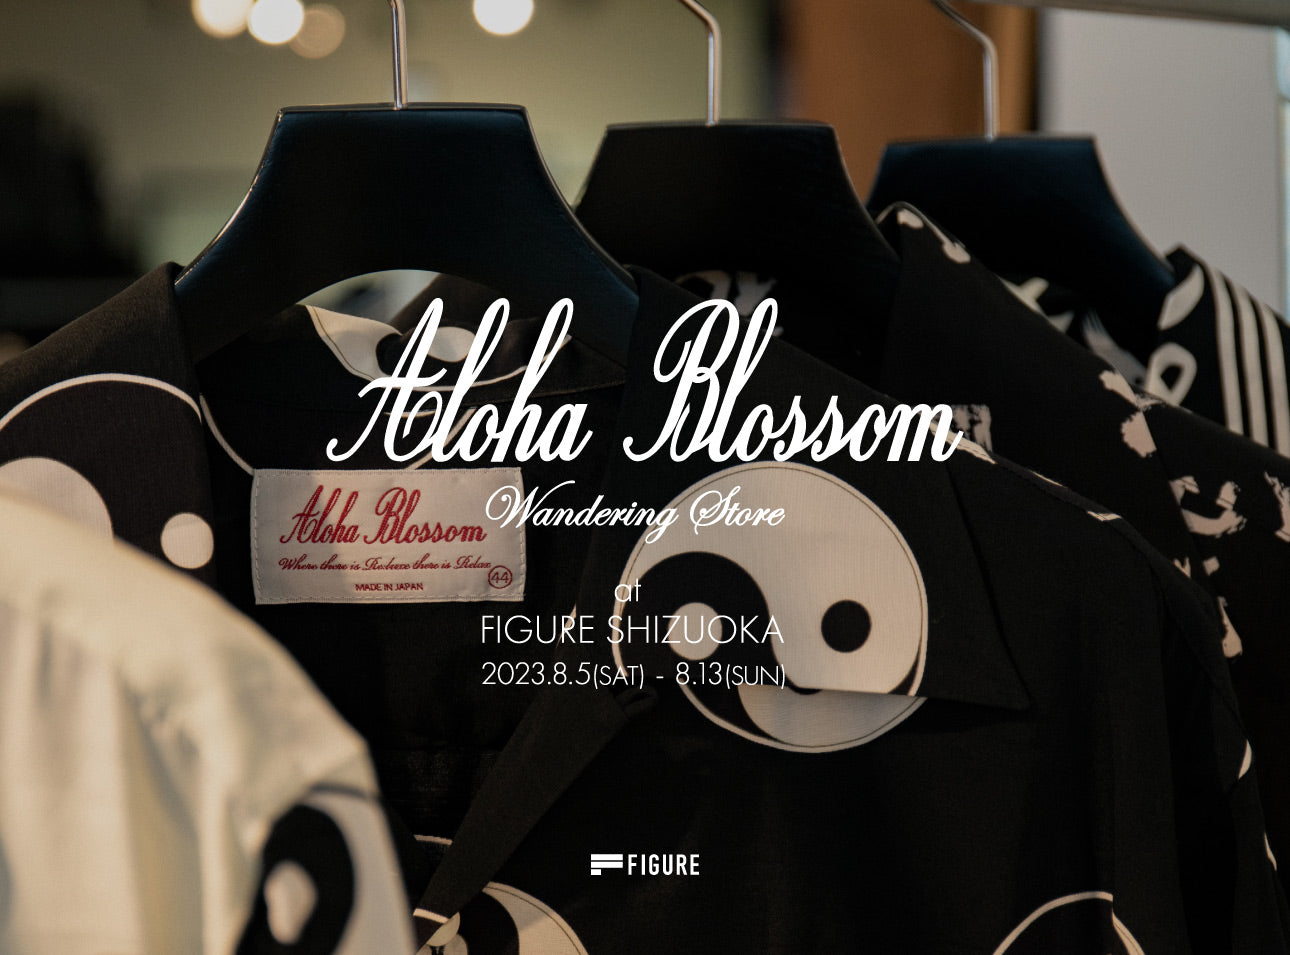 Aloha Blossom Wandering Store  at FIGURE SHIZUOKA